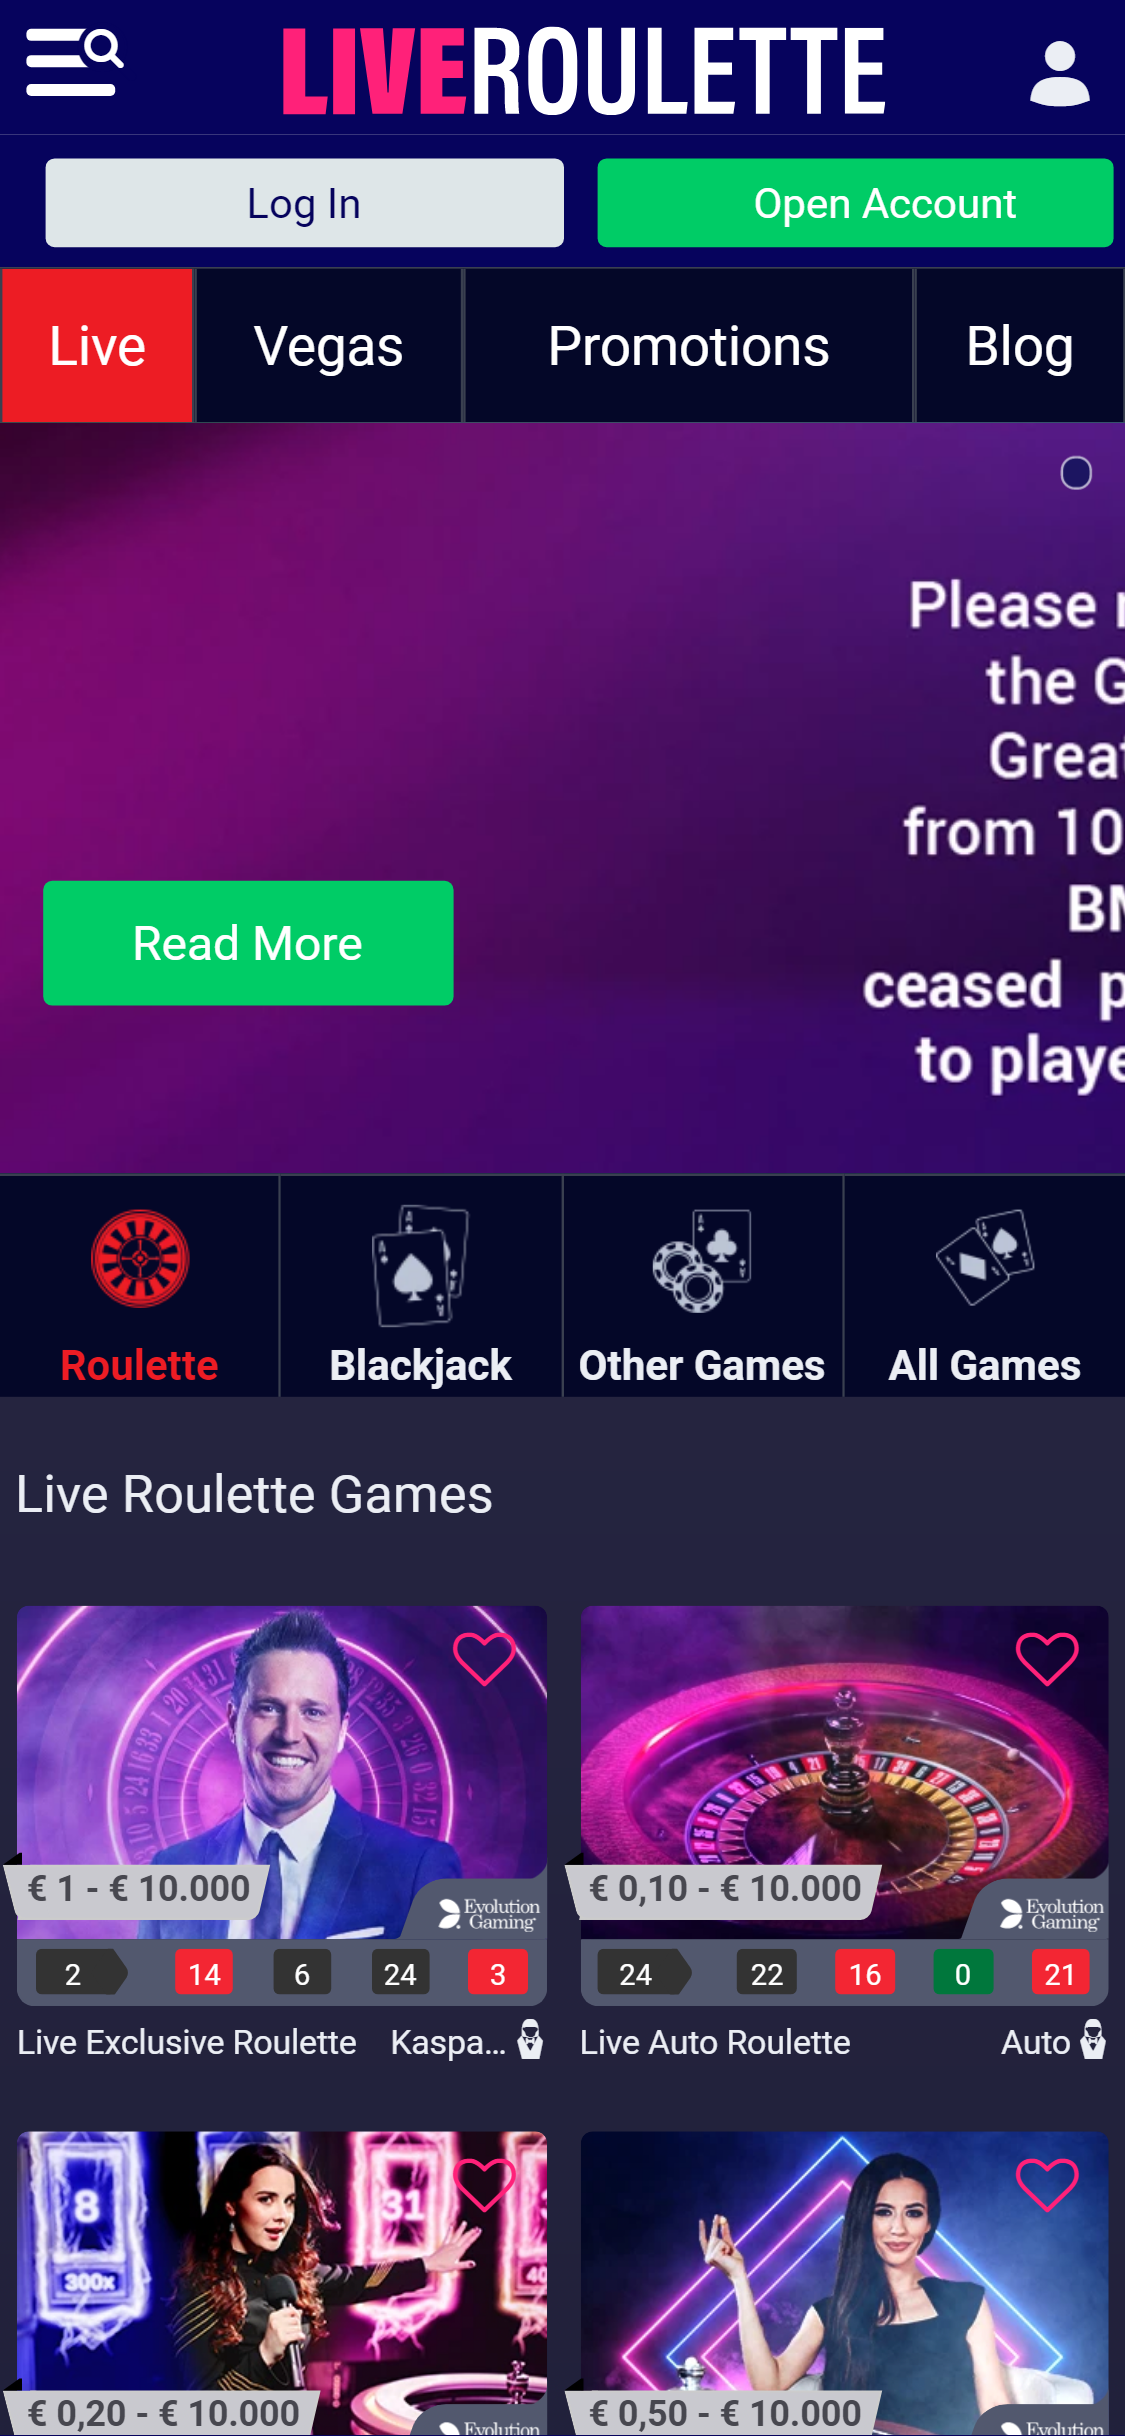 Live Roulette Casino Mobile Review